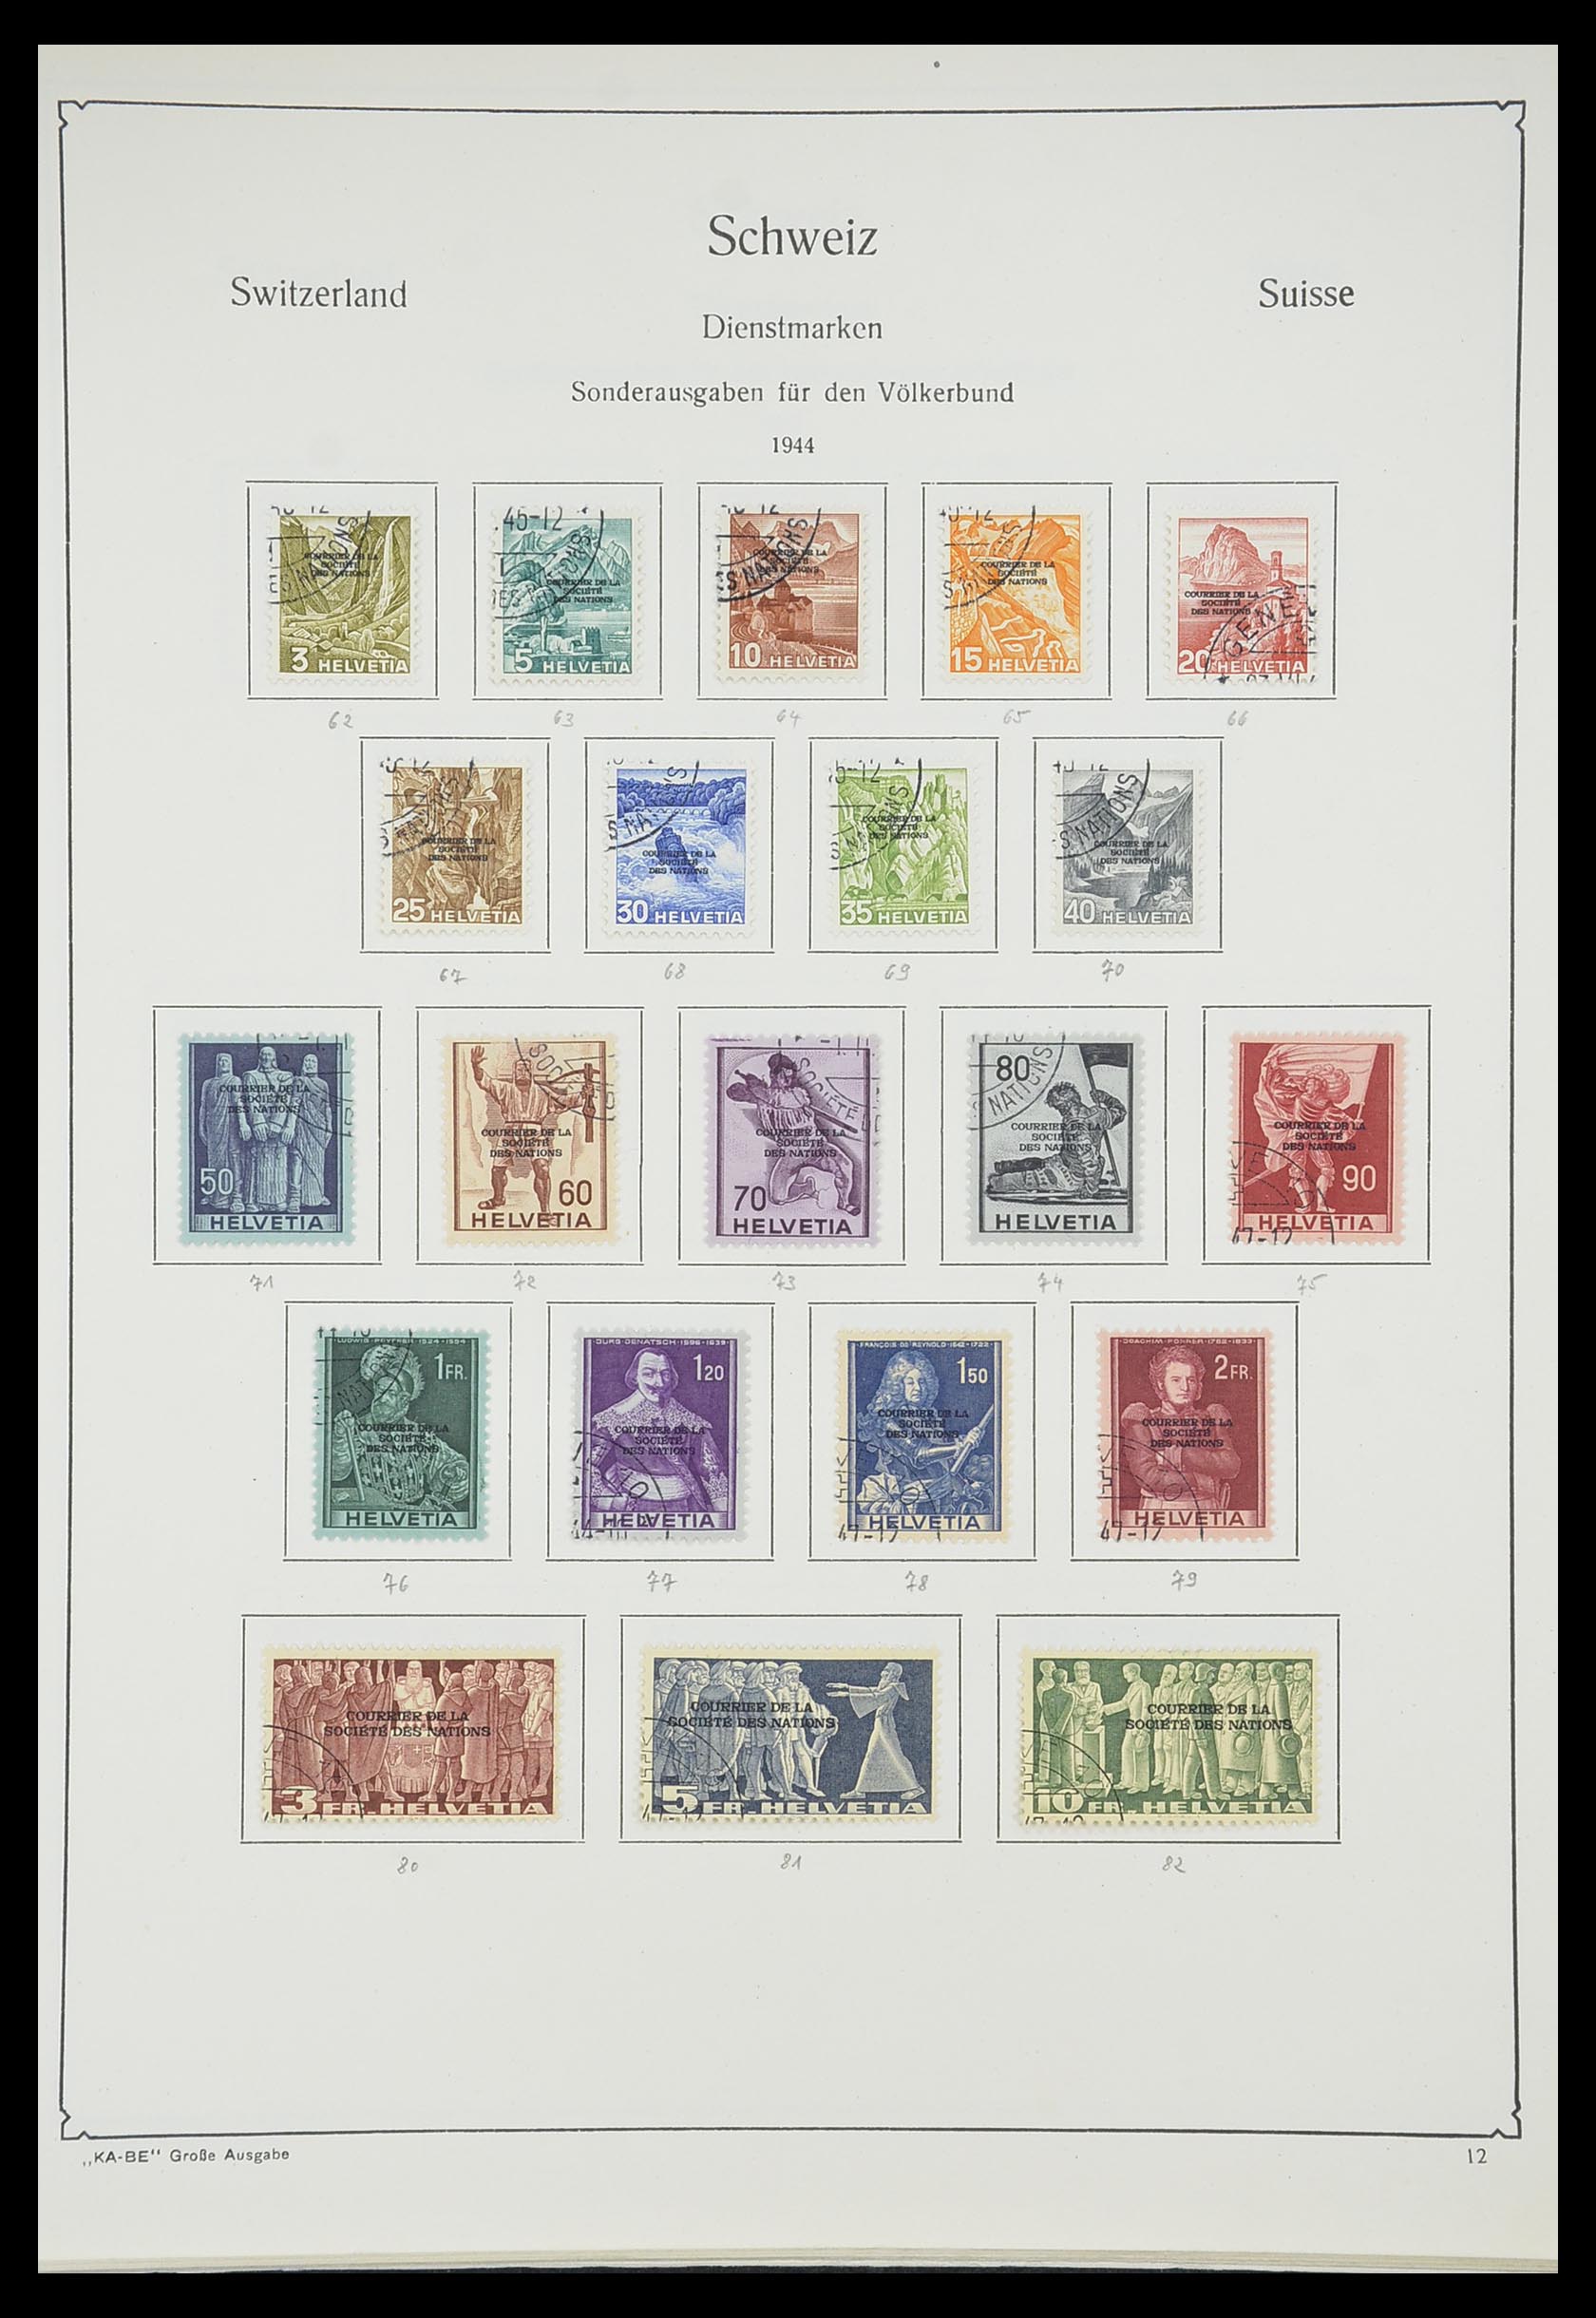 33327 013 - Stamp collection 33327 Switzerland service 1922-1989.